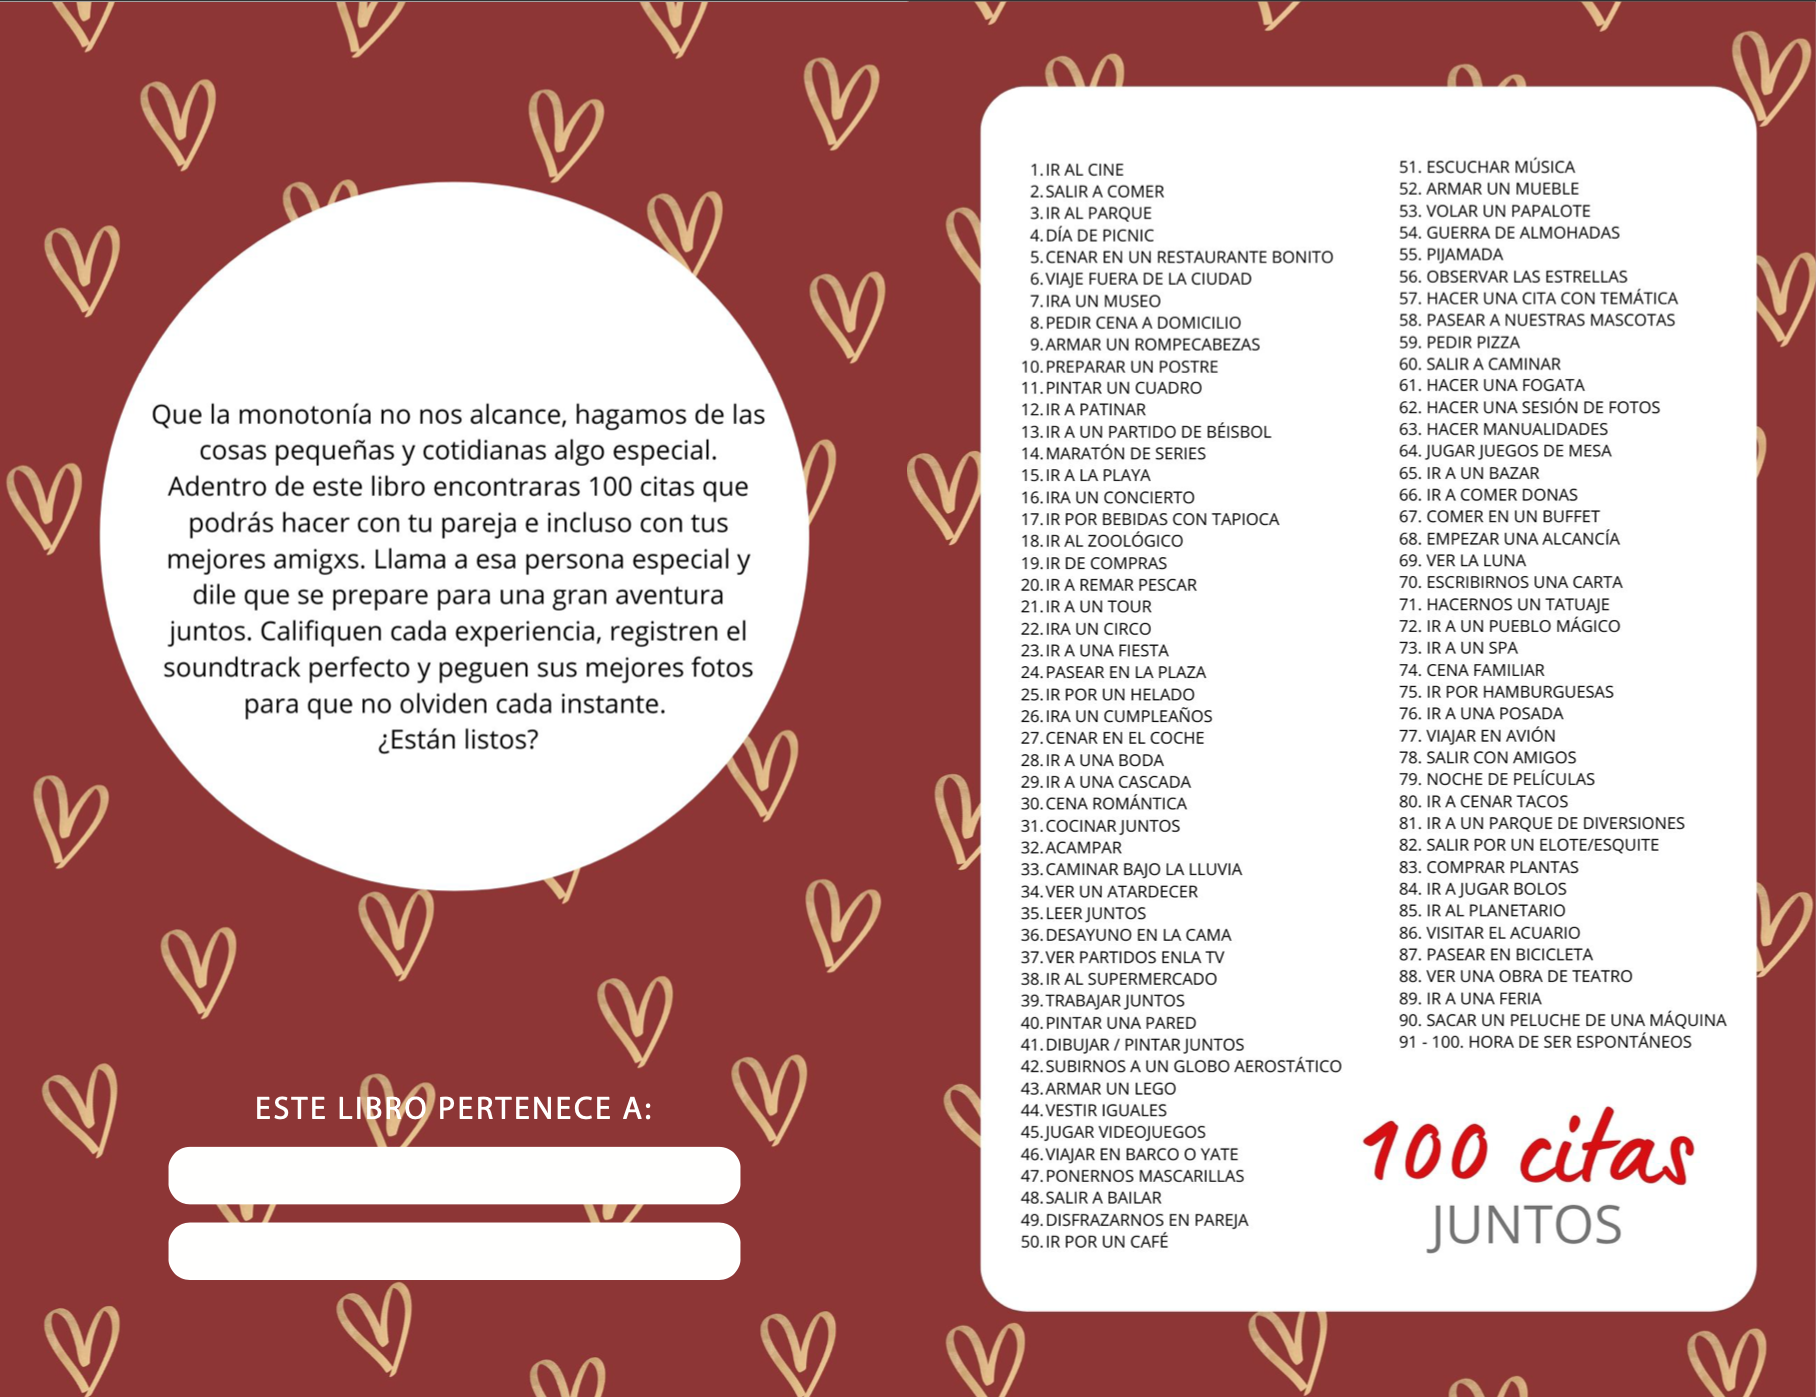 100 Citas Junto A Ti (Spanish Edition)